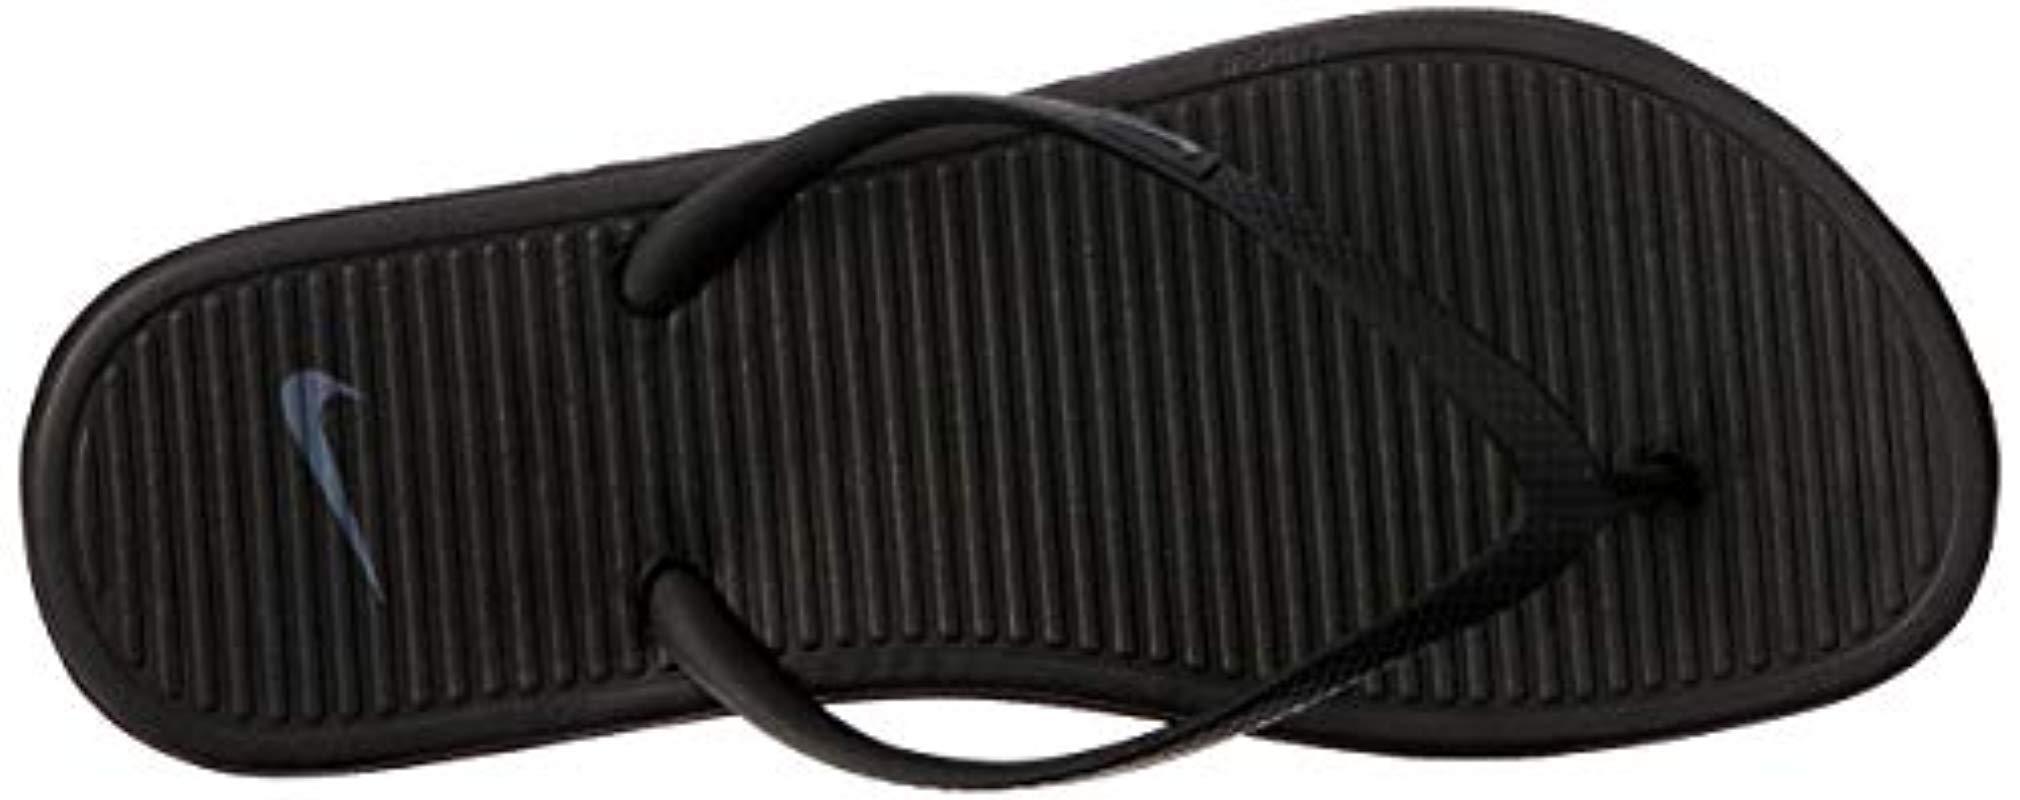 Nike Rubber Solarsoft Thong 2 Athletic Sandal in Black | Lyst